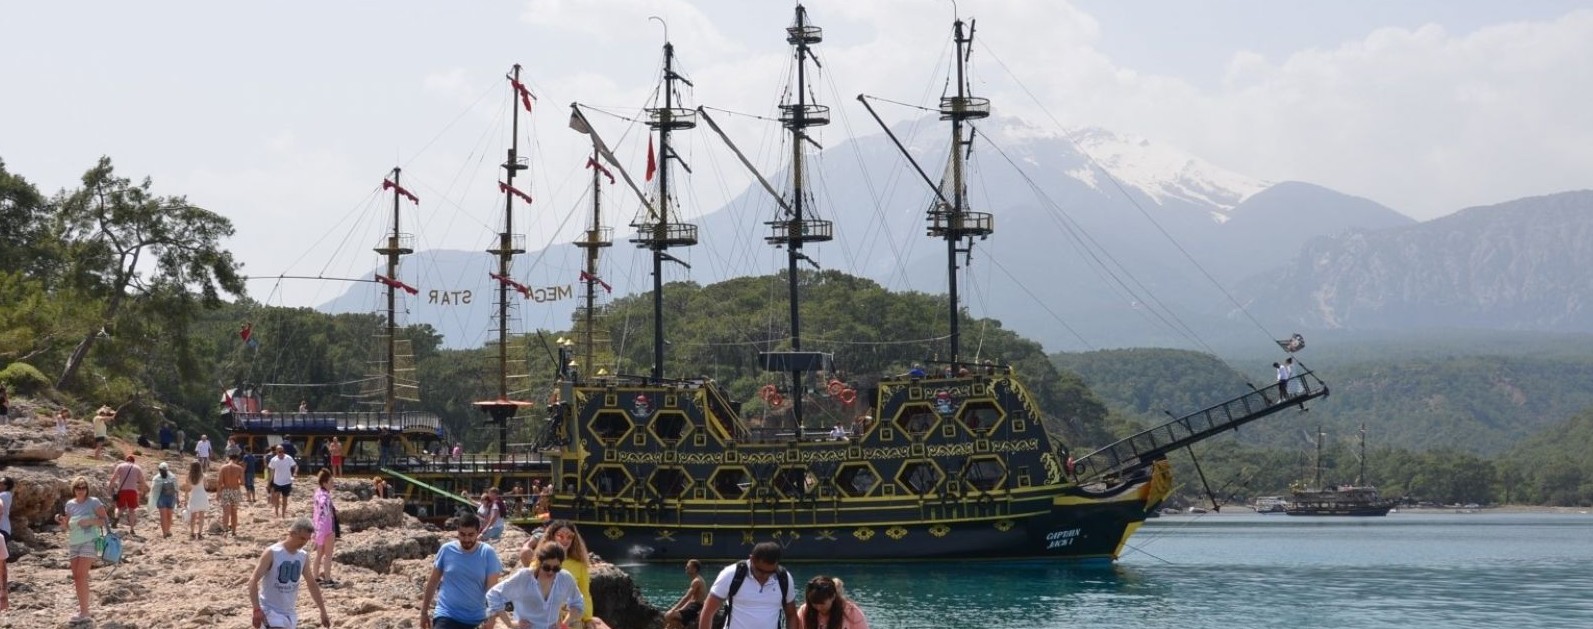 Тур на Пиратском Корабле antalya ekskursii